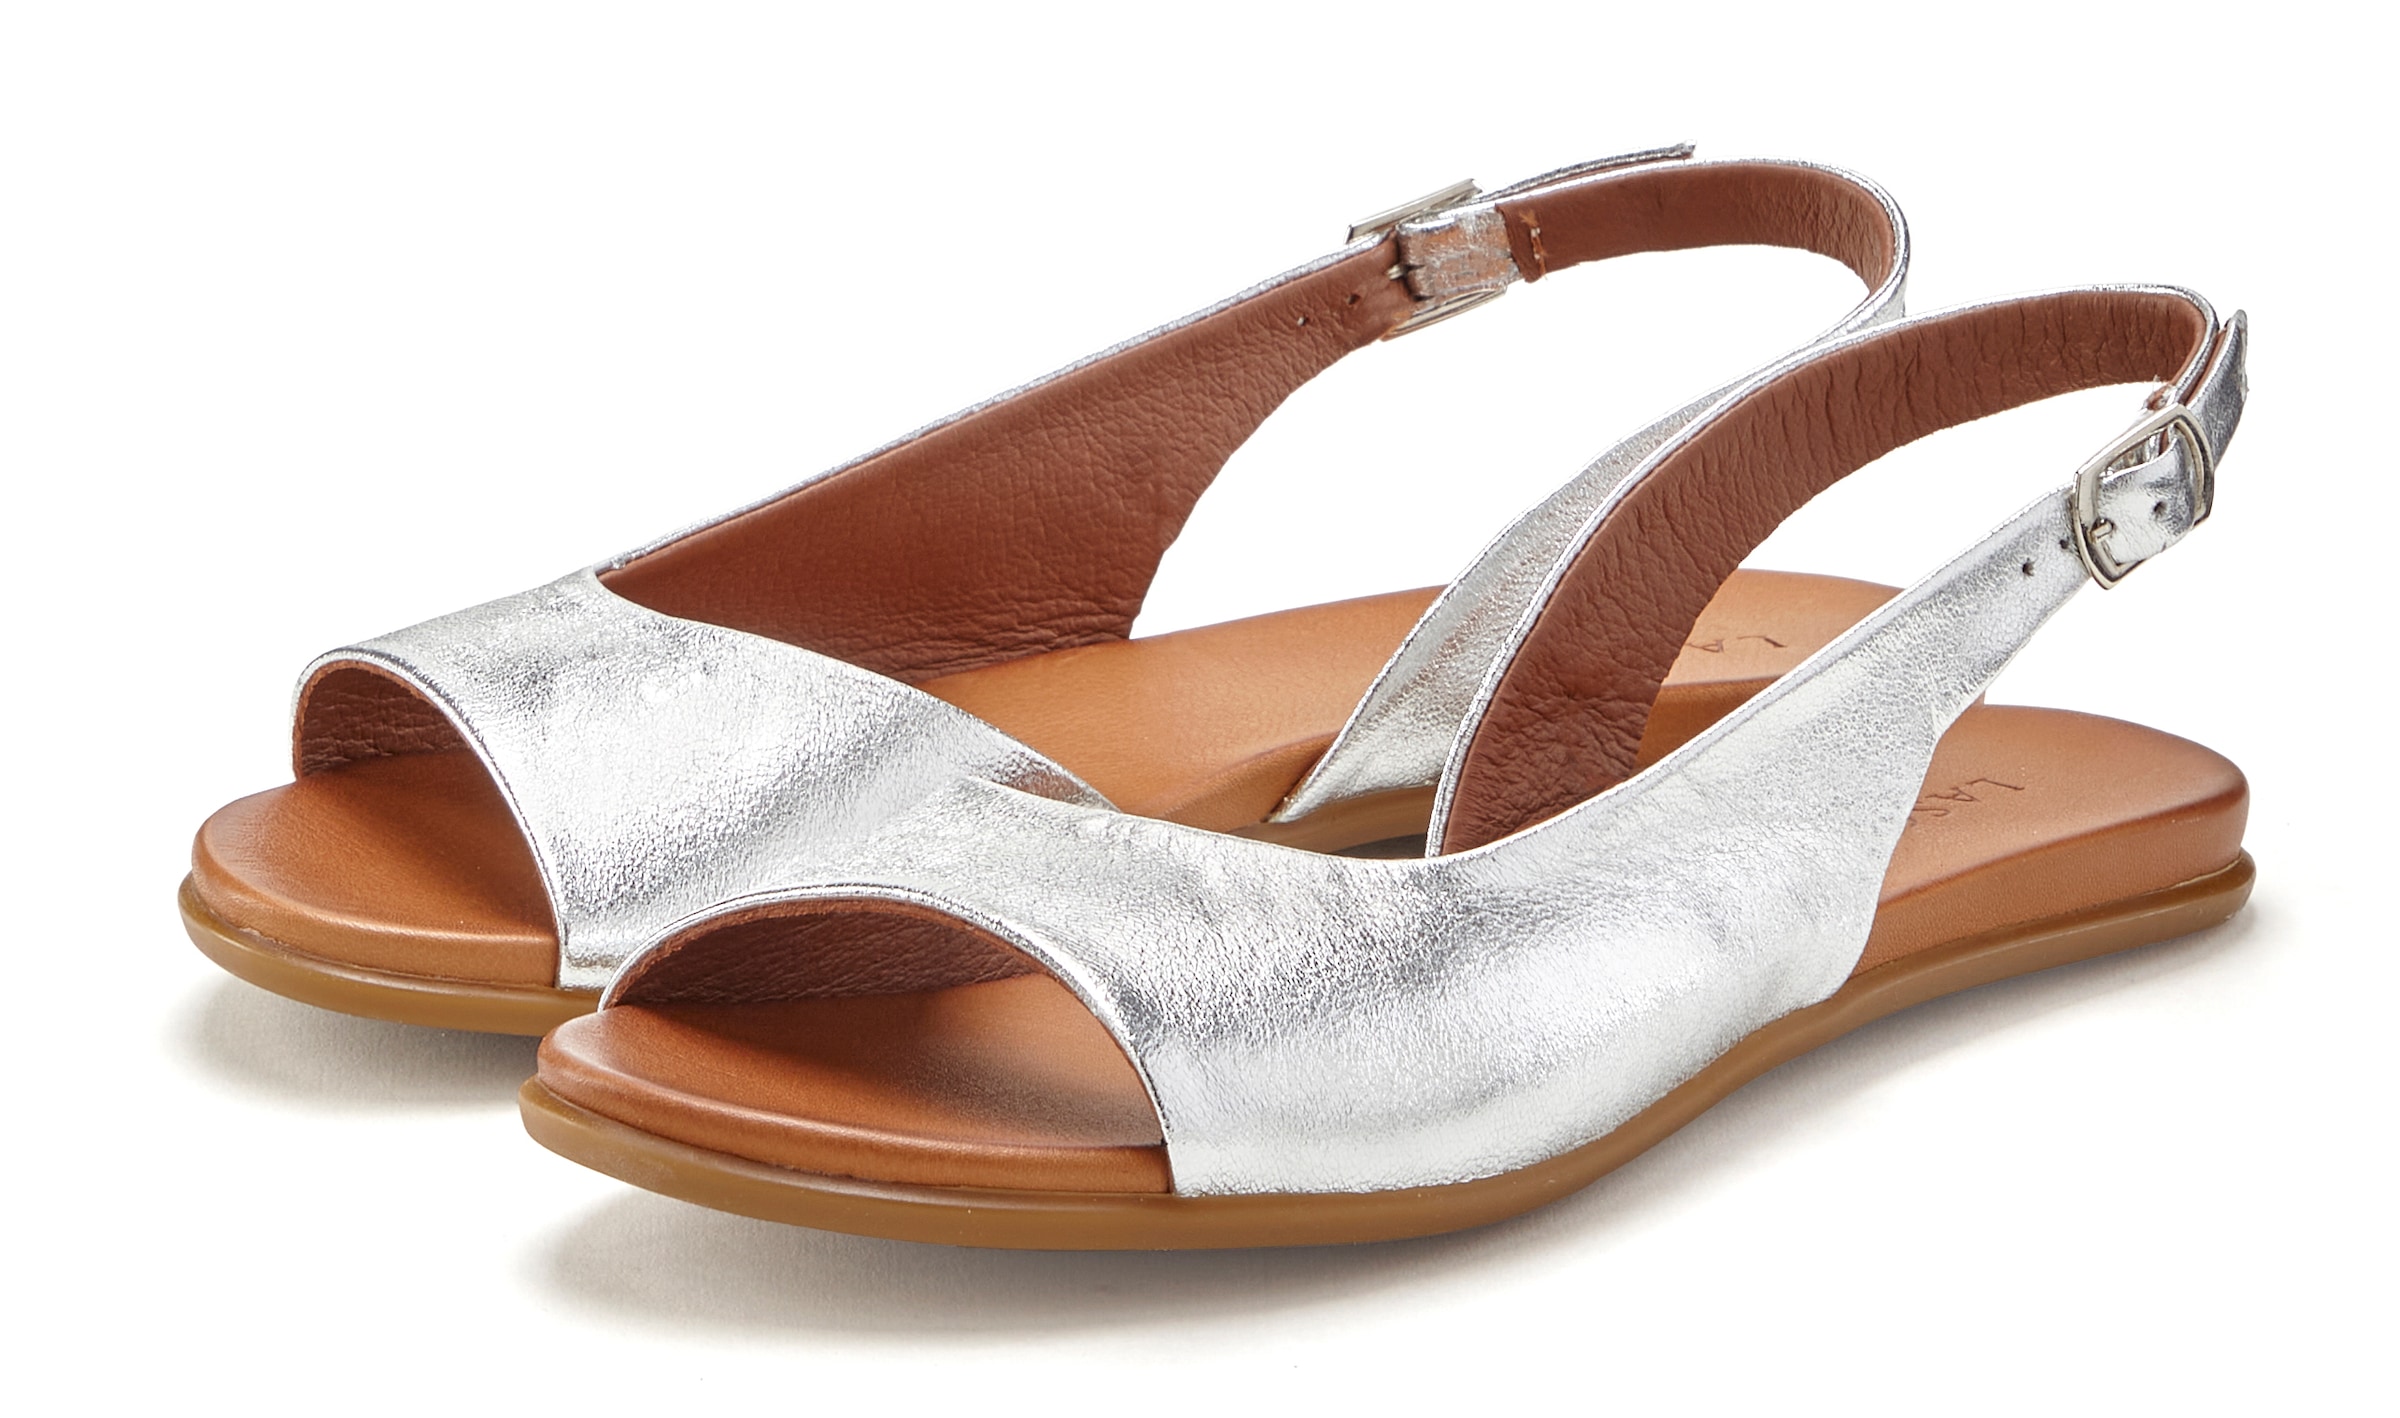 Sandale, aus Leder in modischer Metallic-Optik, Sandalette, Sommerschuh